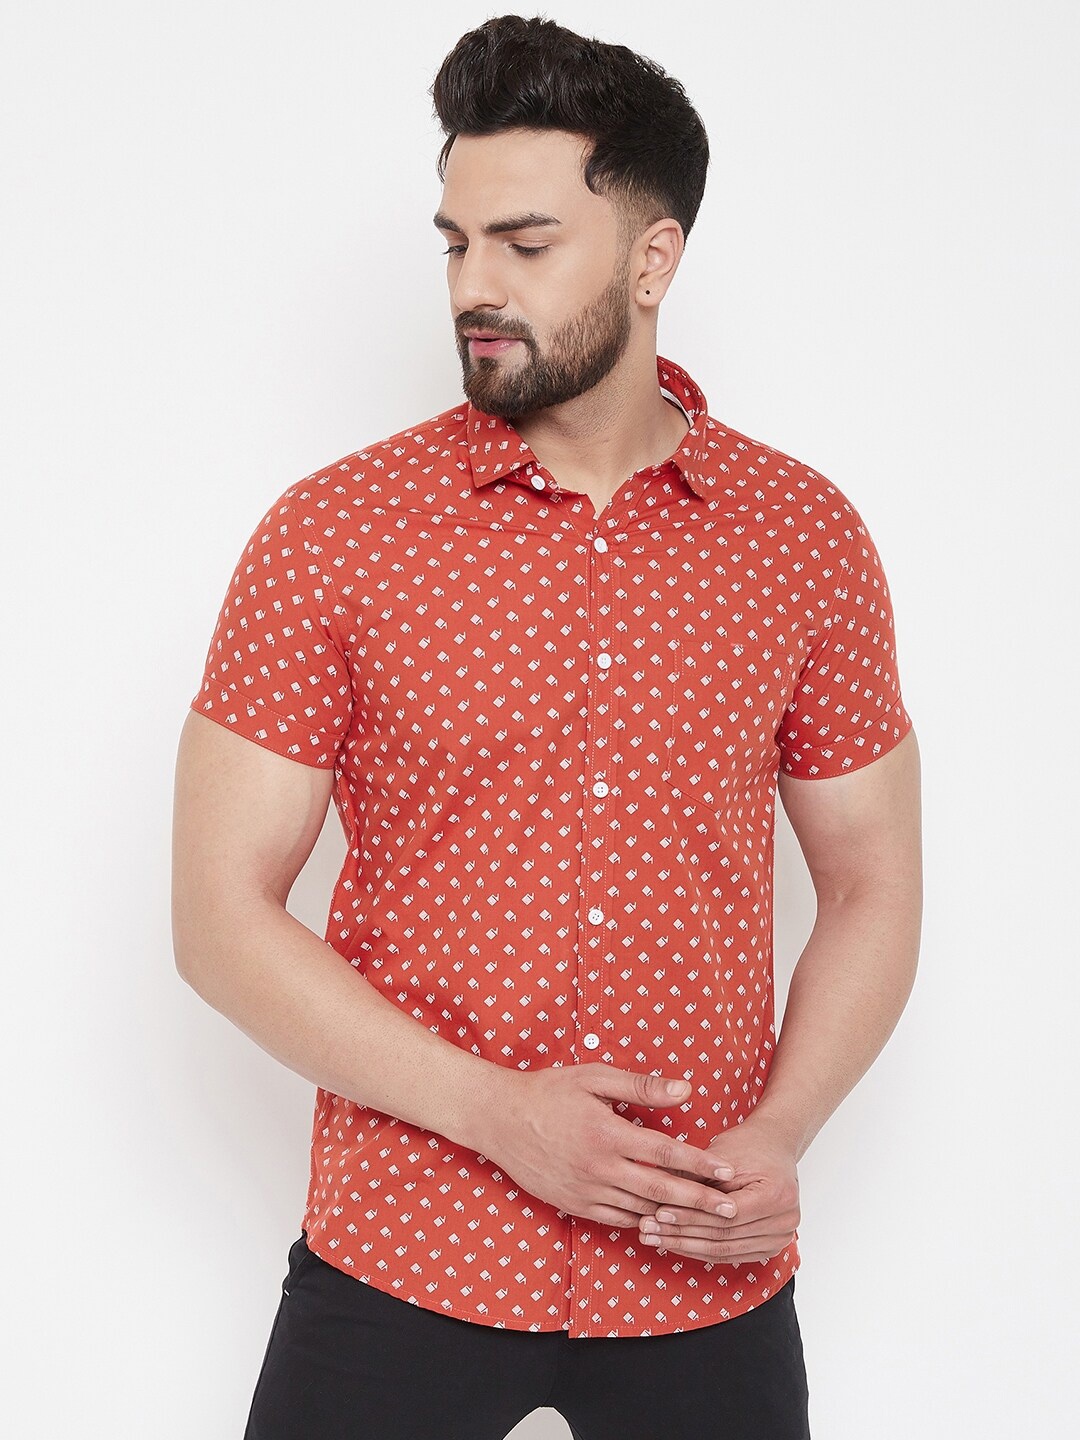 

Canary London Smart Slim Fit Geometric Printed Casual Cotton Shirt, Orange